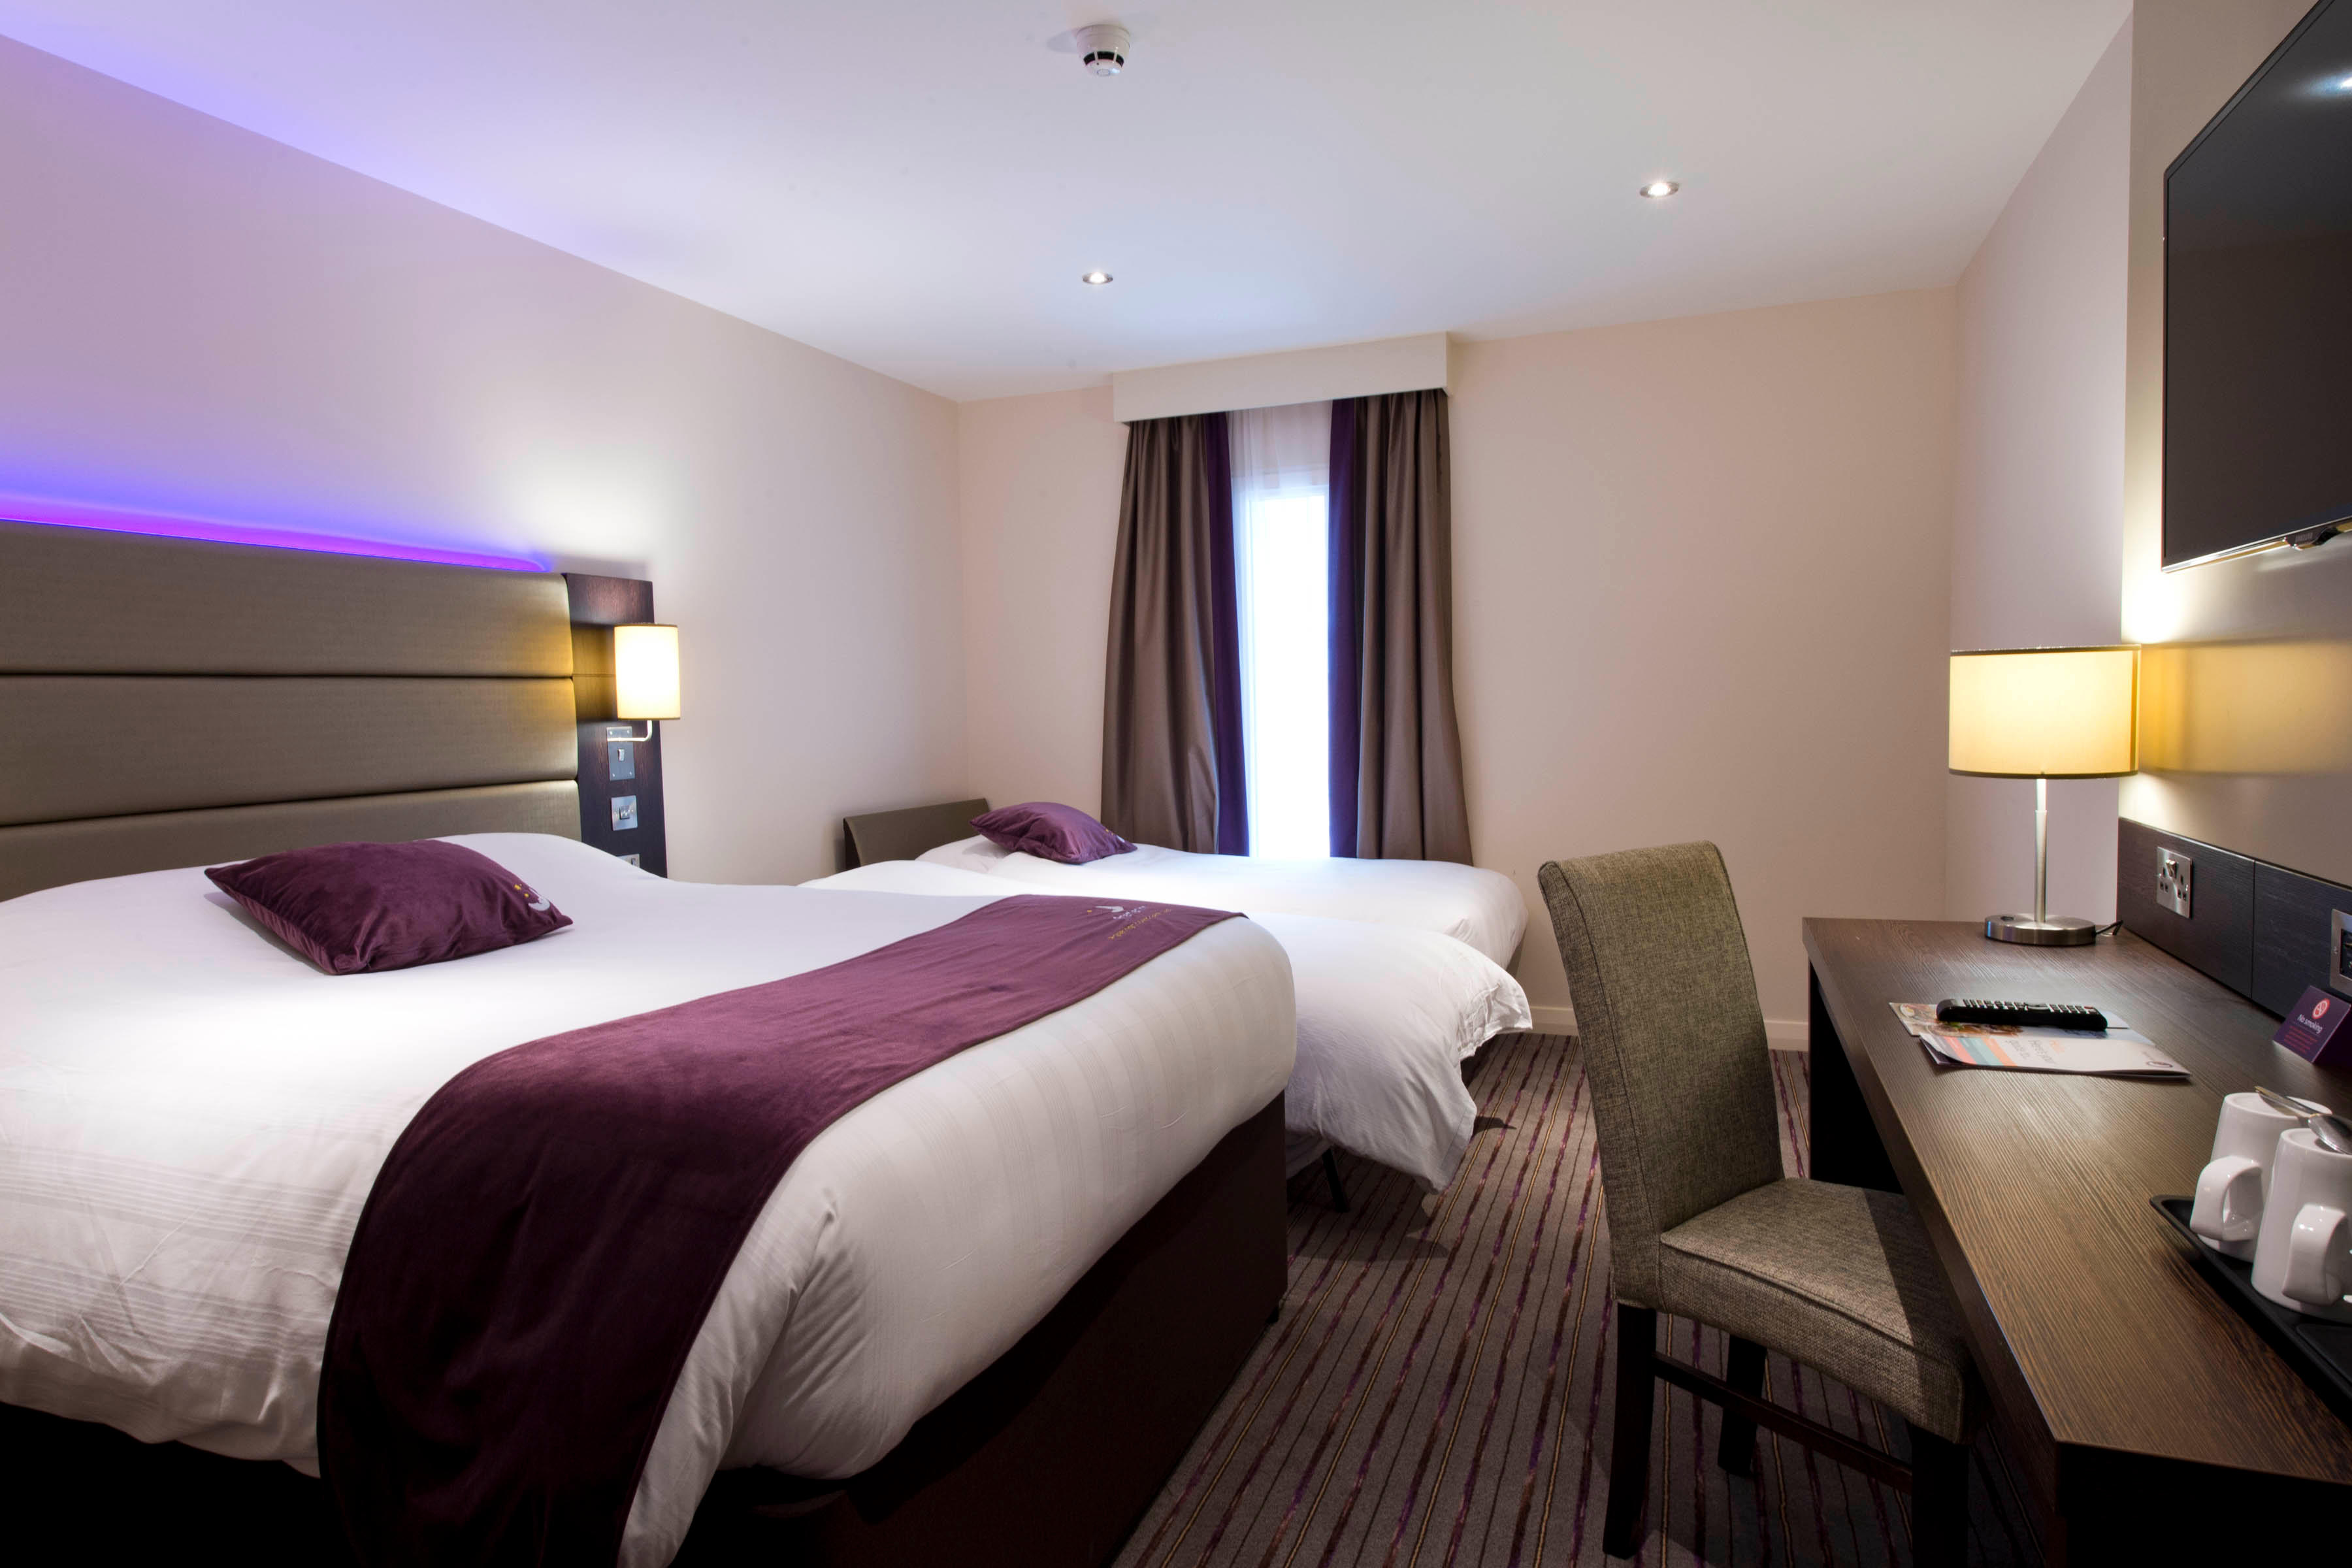 Premier Inn bedroom Premier Inn London Brixton hotel Brixton 03333 219362